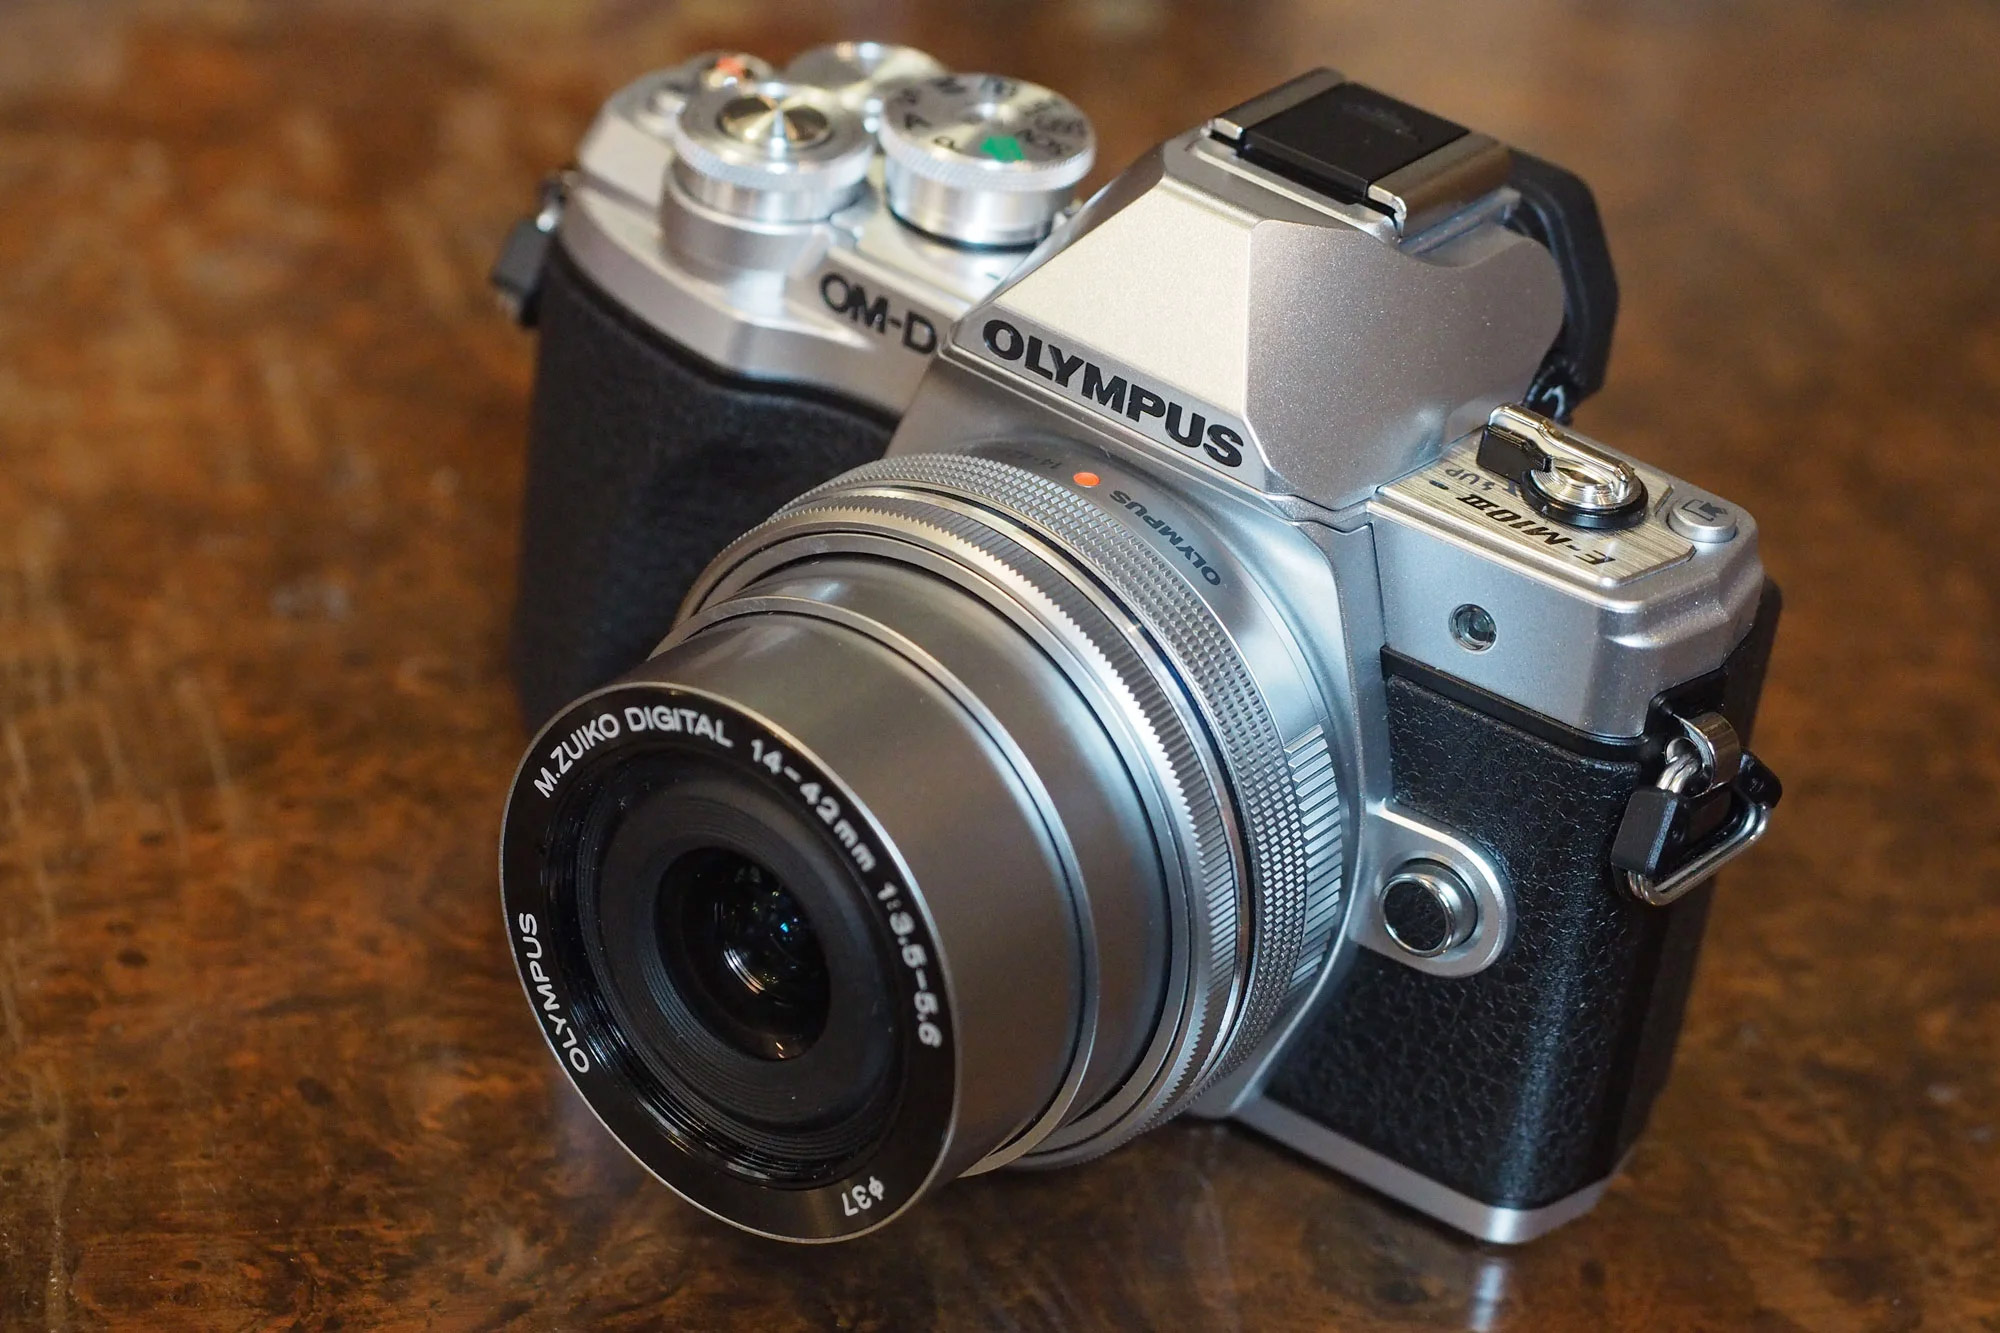 OLYMPUS OM-D E-M10 Mark IIIカメラ - デジタルカメラ